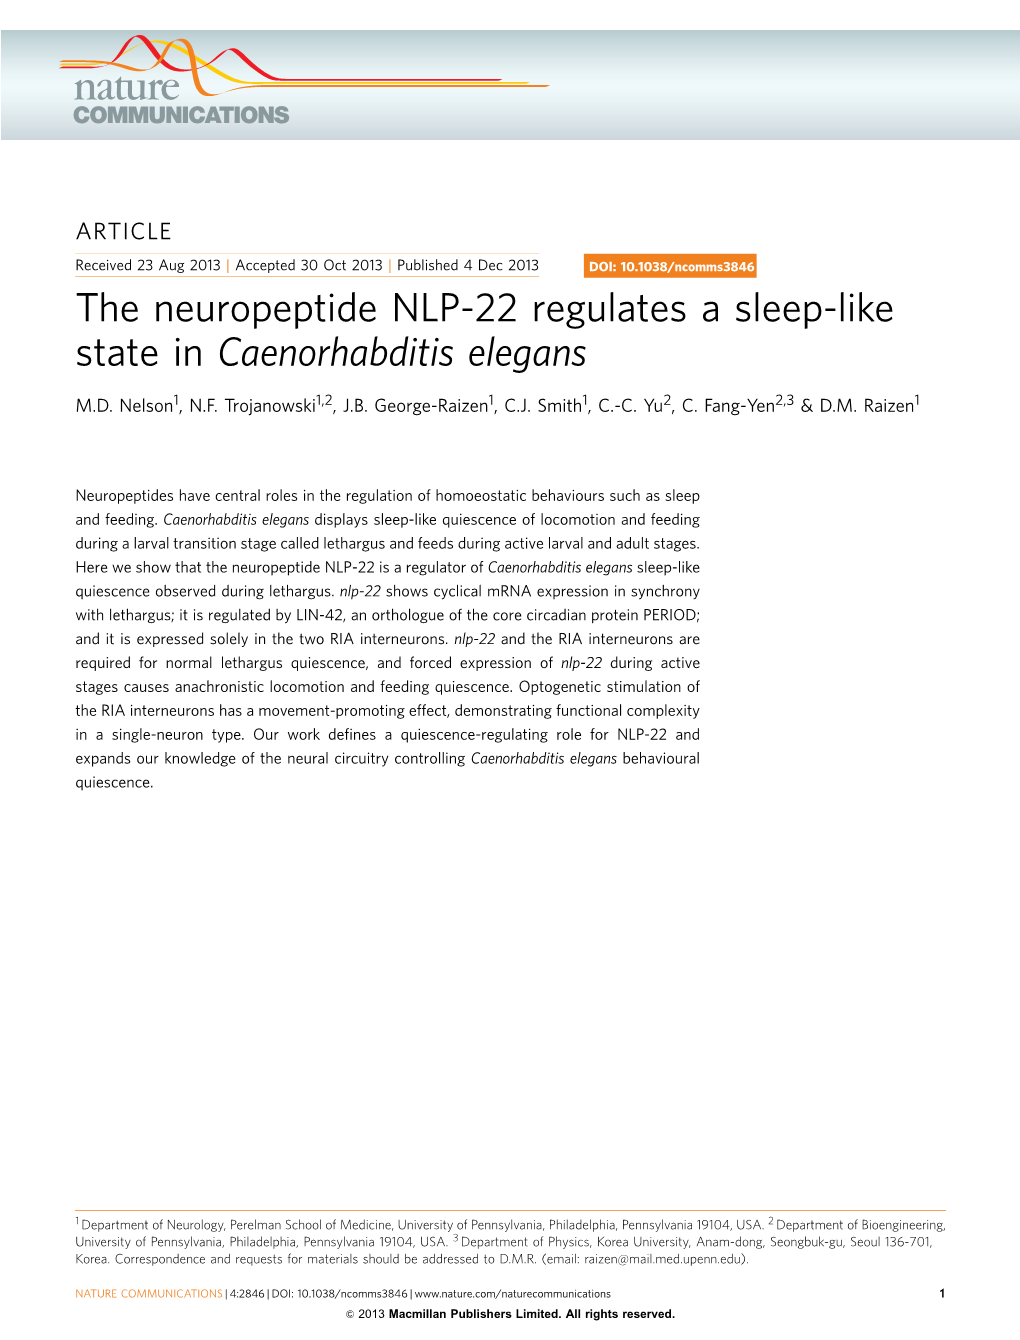 The Neuropeptide NLP-22 Regulates a Sleep-Like State in Caenorhabditis Elegans